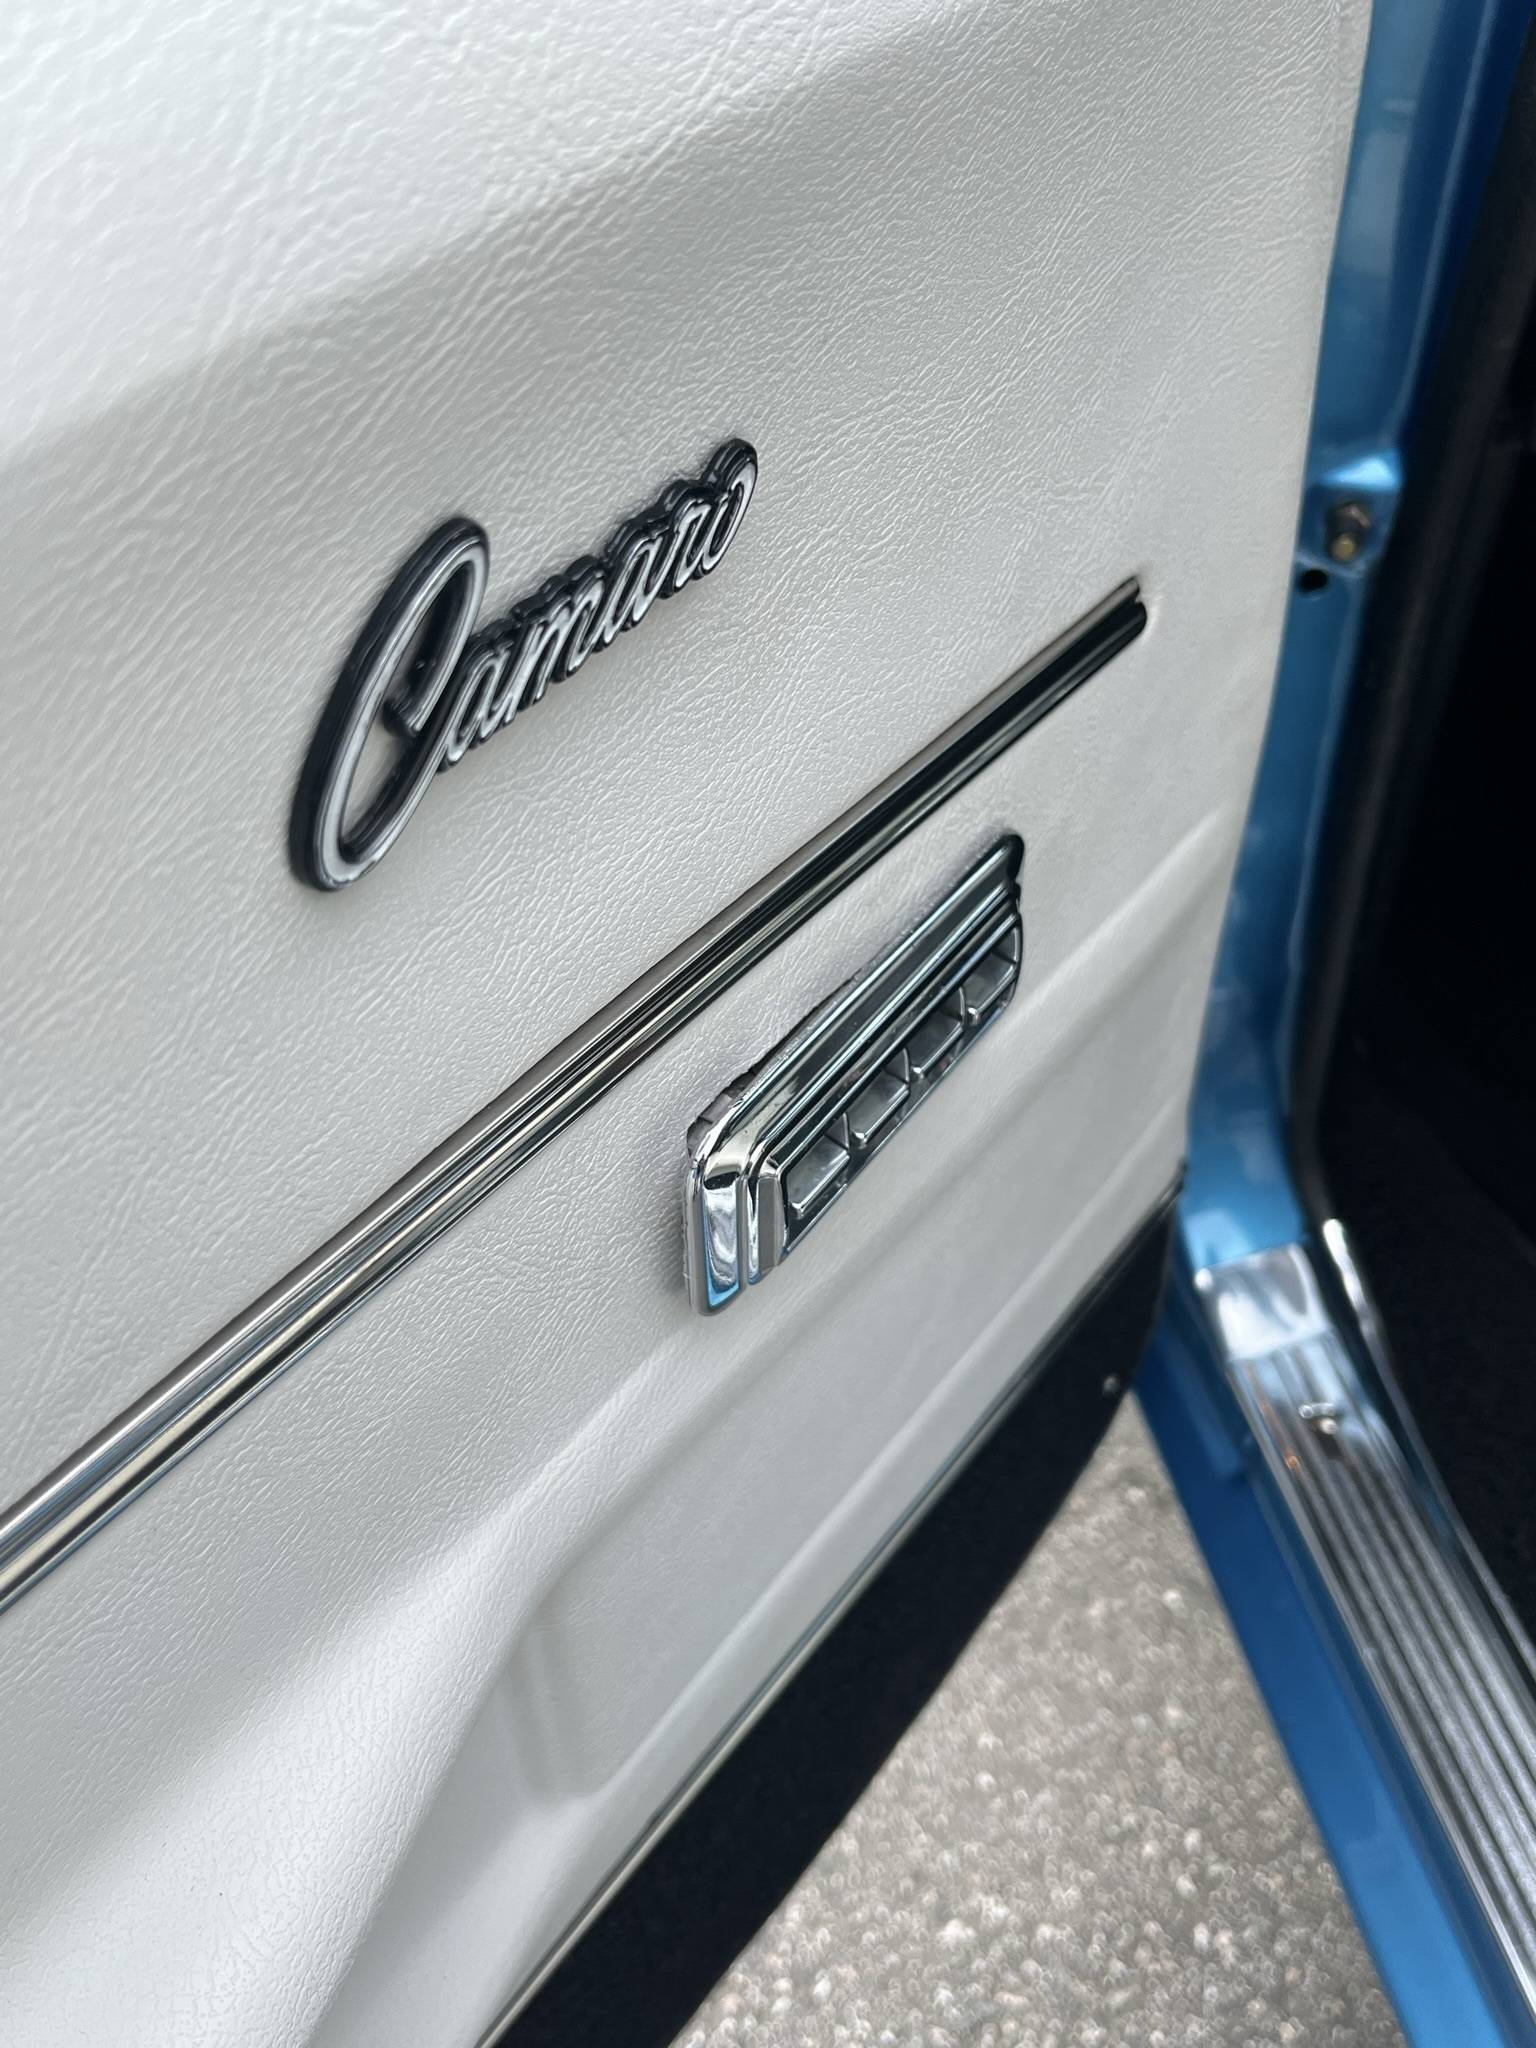 1968 Chevrolet Camaro 28